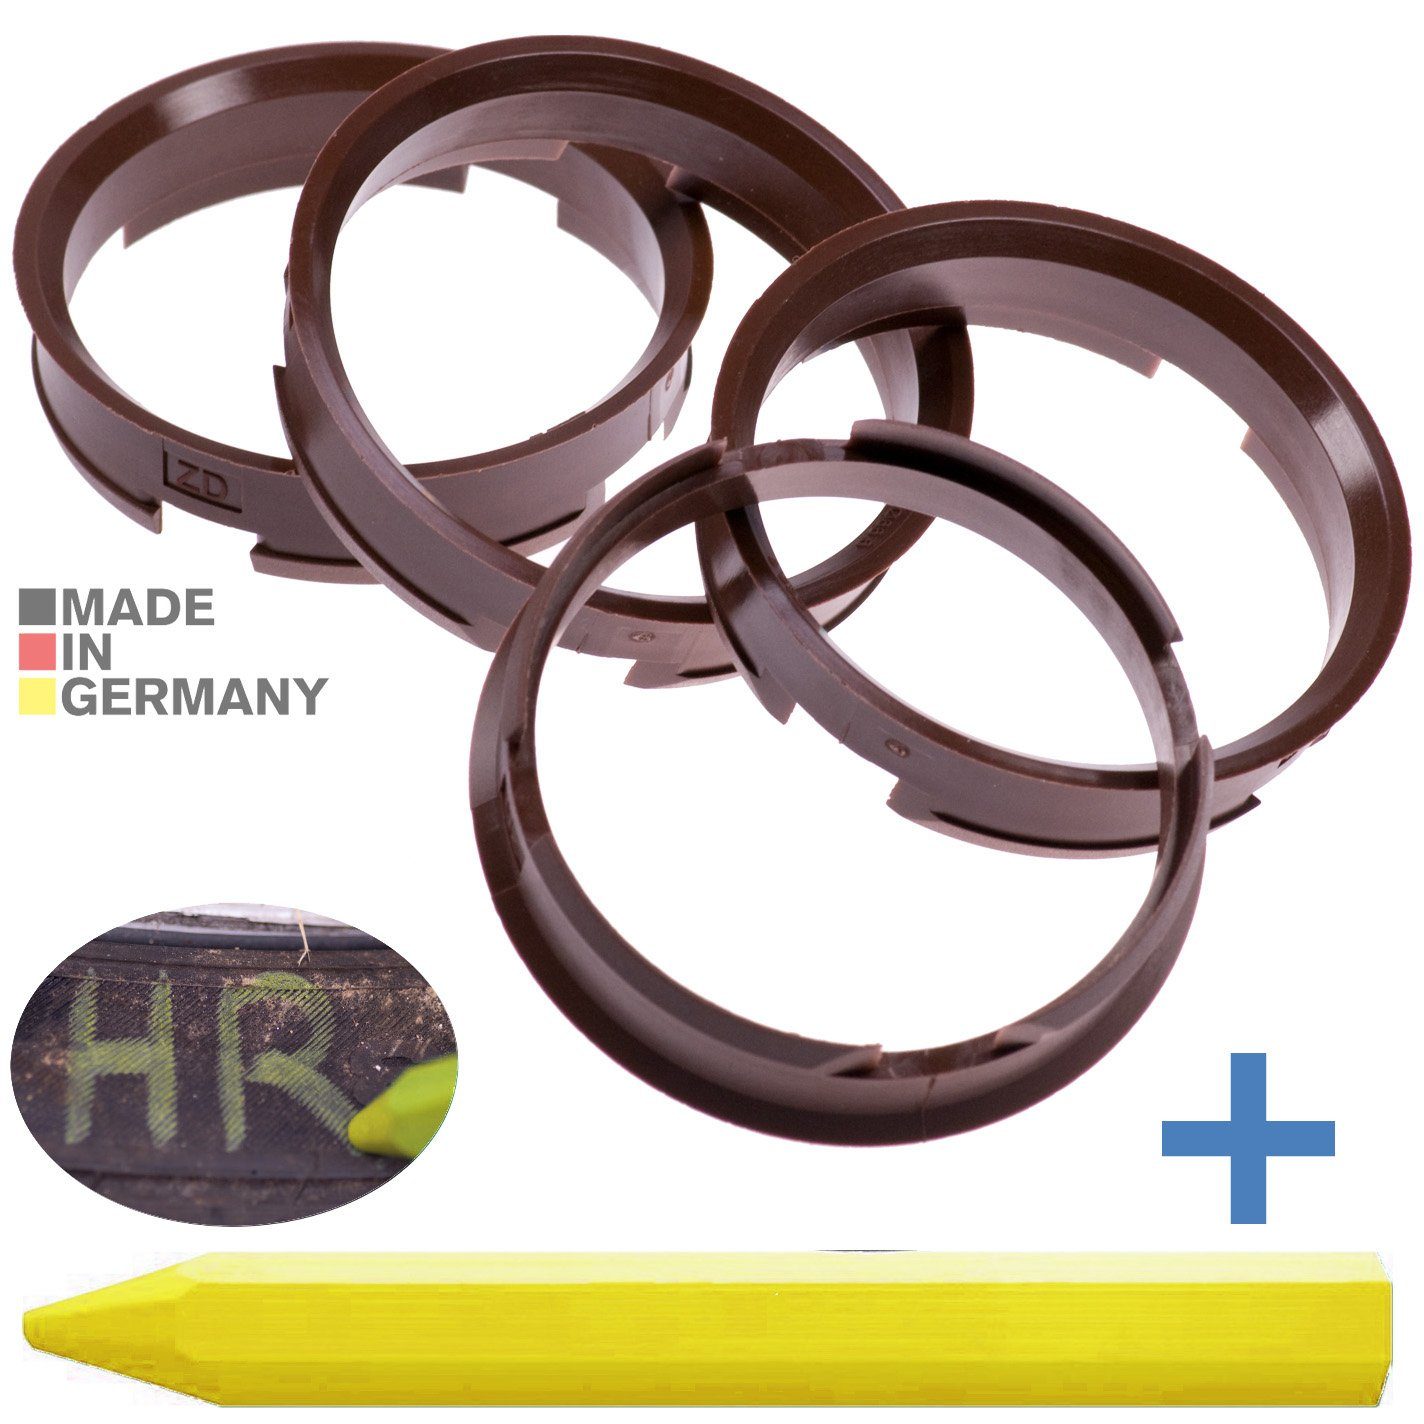 x Fett Maße: RKC Reifenstift Braun 1x Reifen Kreide 66,6 Stift, mm 4X Zentrierringe 72,6 Felgen Ringe +